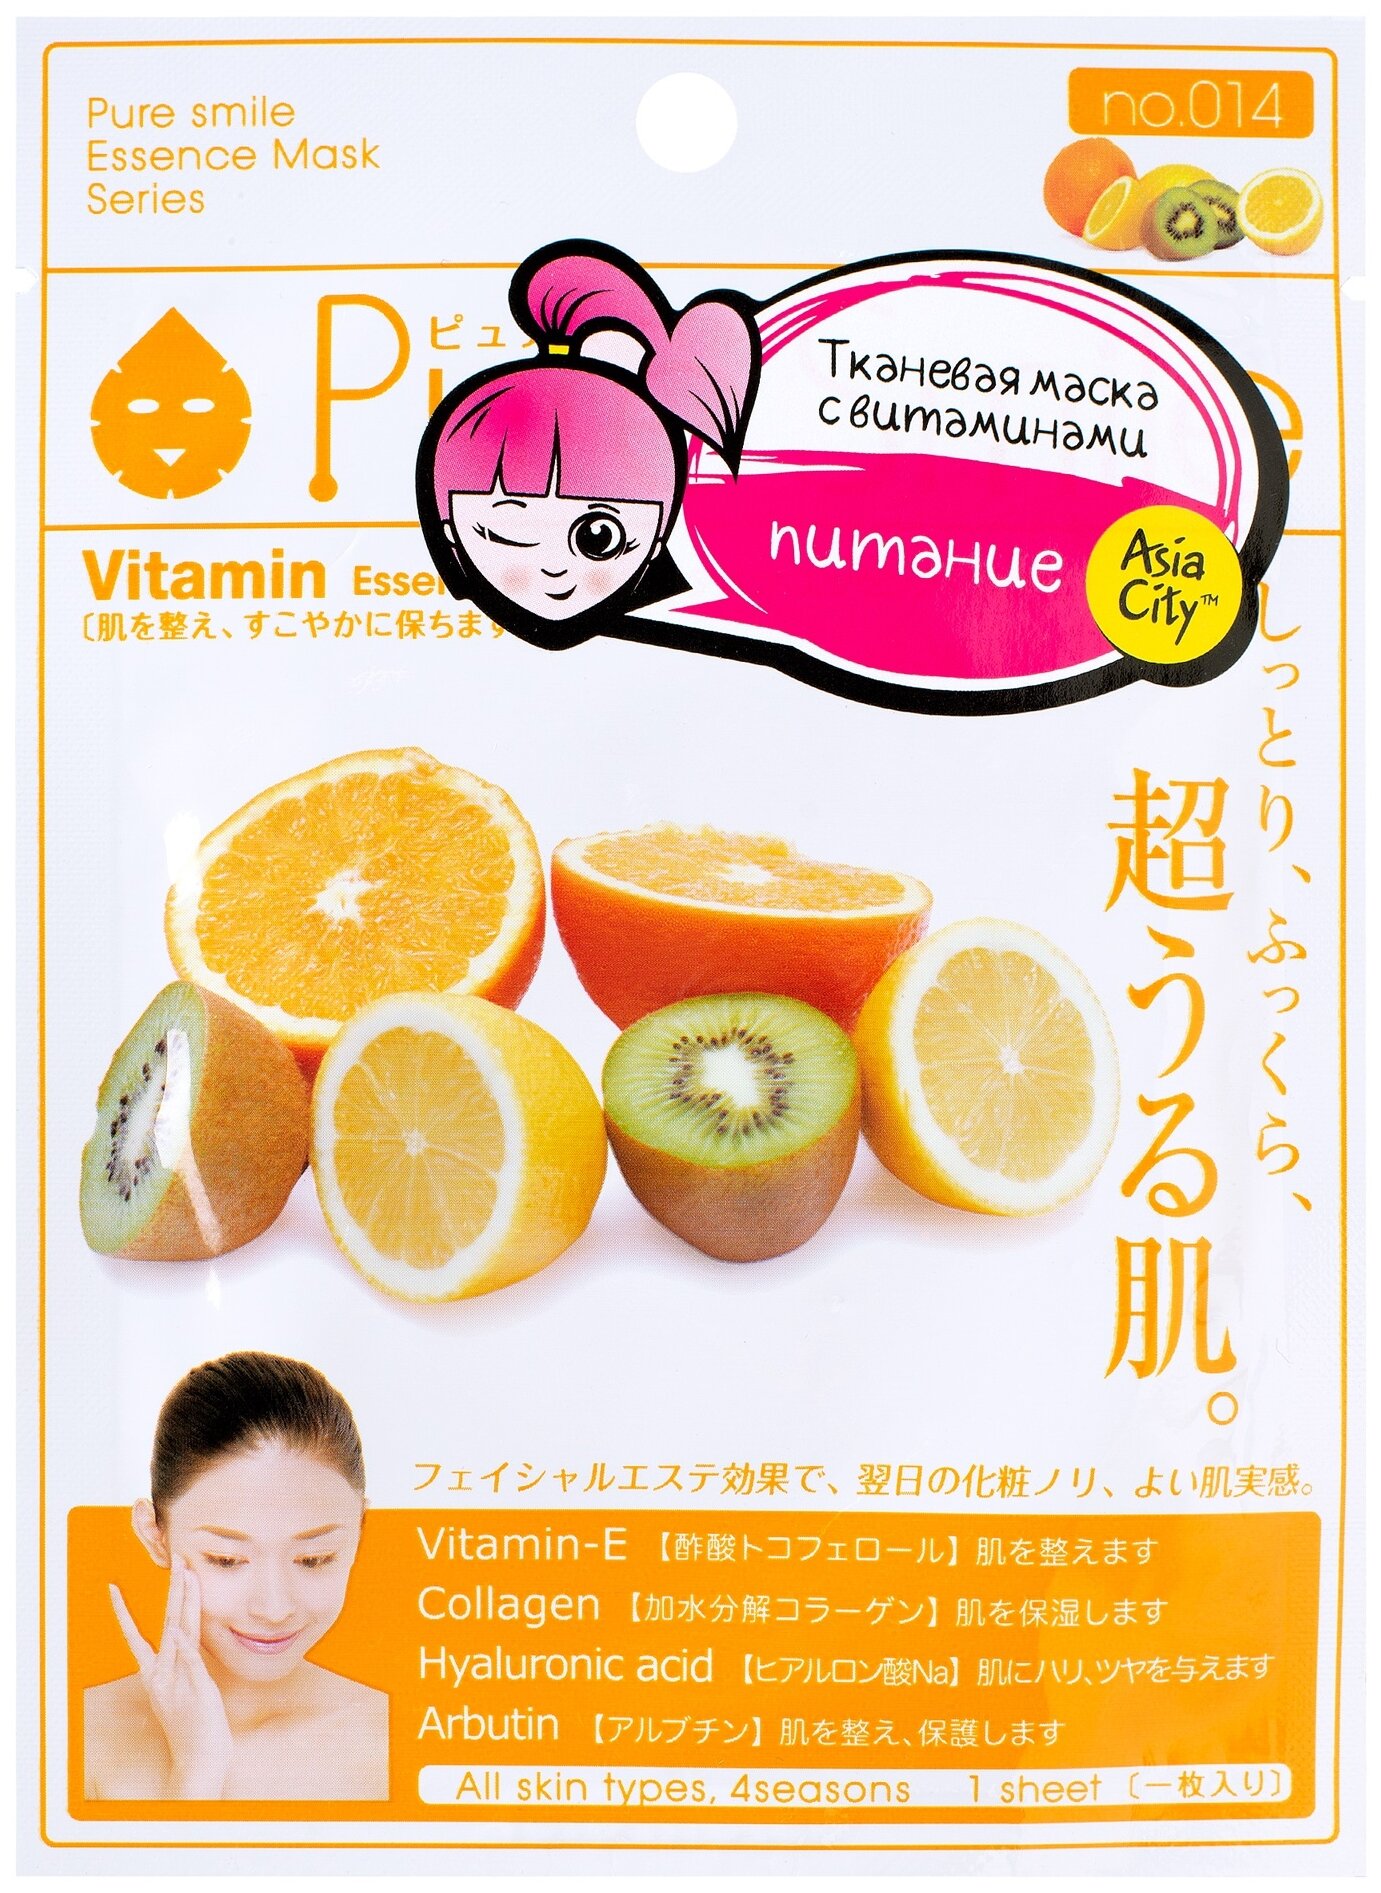 Sun Smile тканевая маска Pure smile Vitamin Essence с витаминным комплексом, 30 г, 23 мл